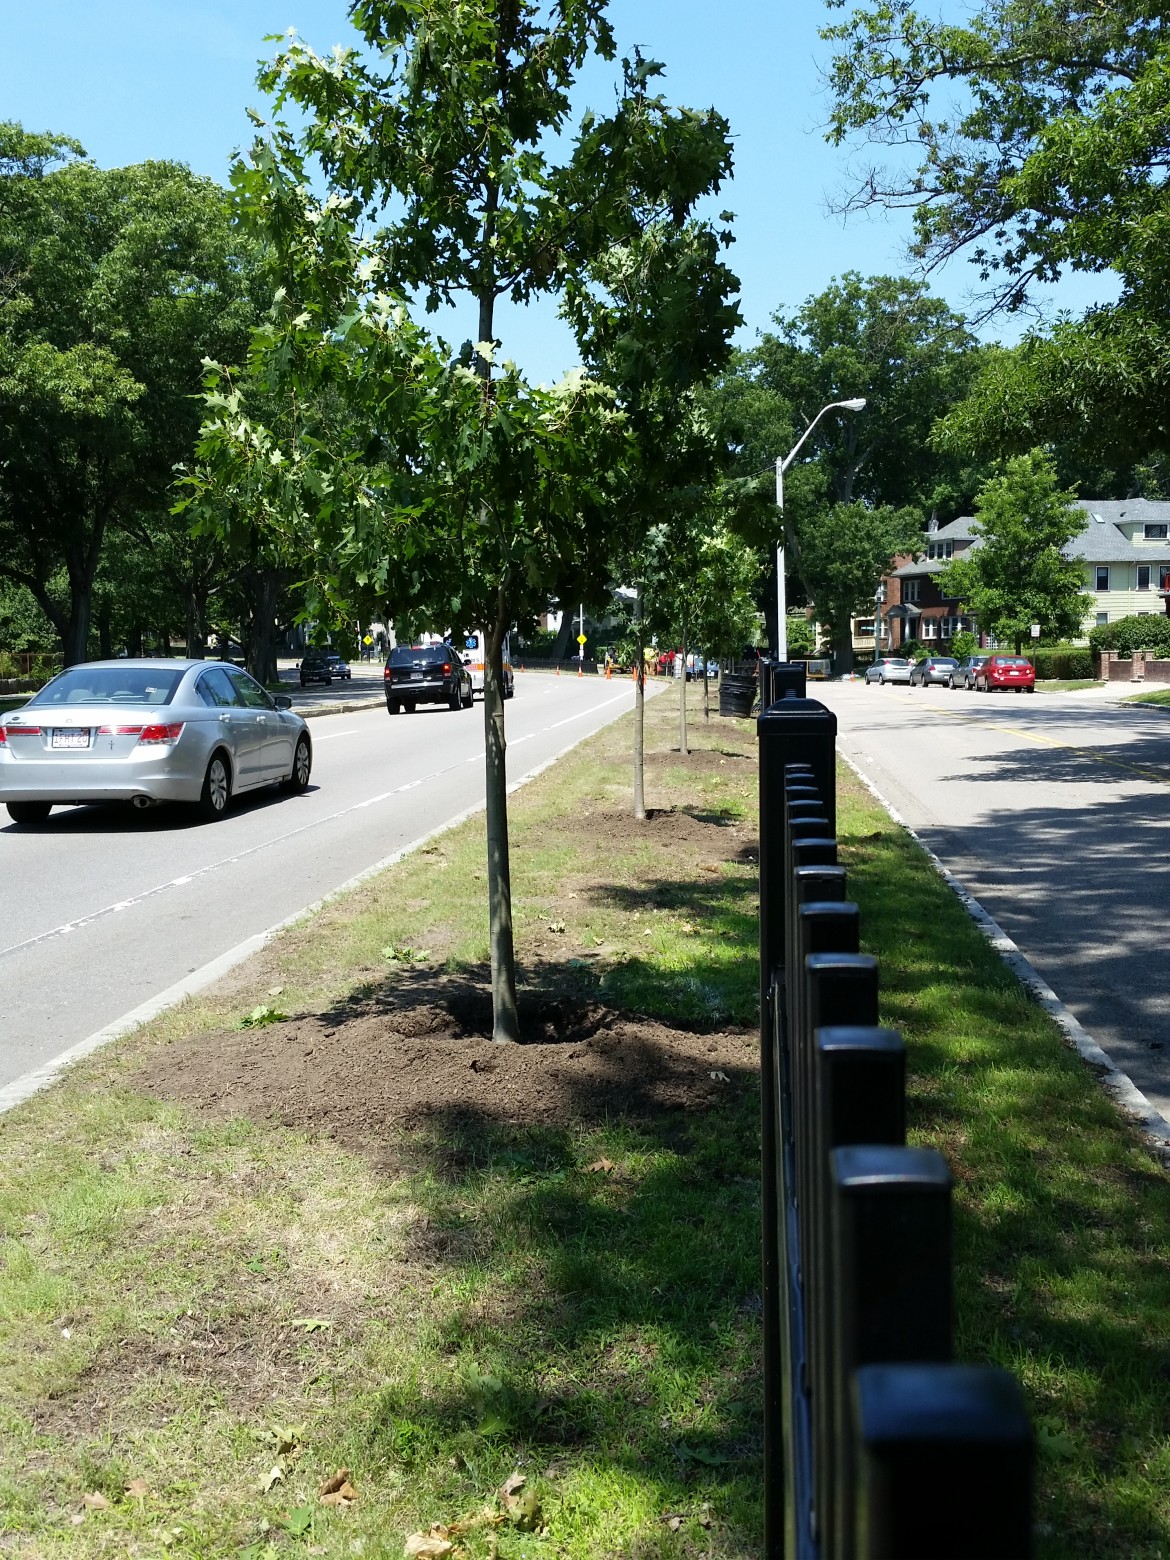 Near tree plantings along the Arborway, July 2014.